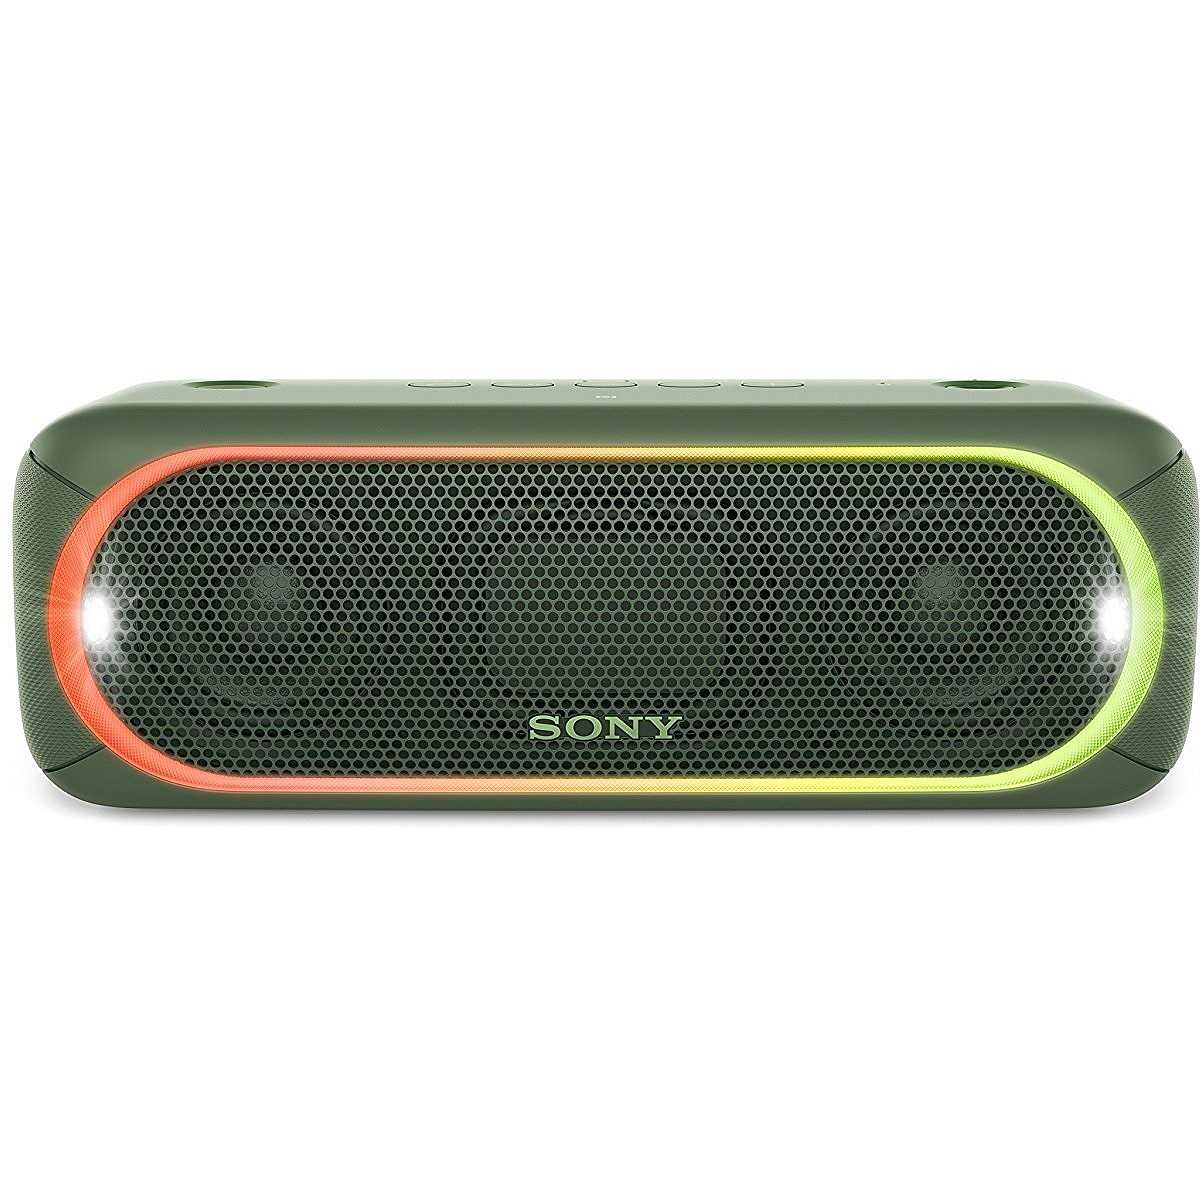 Sony SRS-XB30 speaker portatile wireless Bluetooth con luci colore